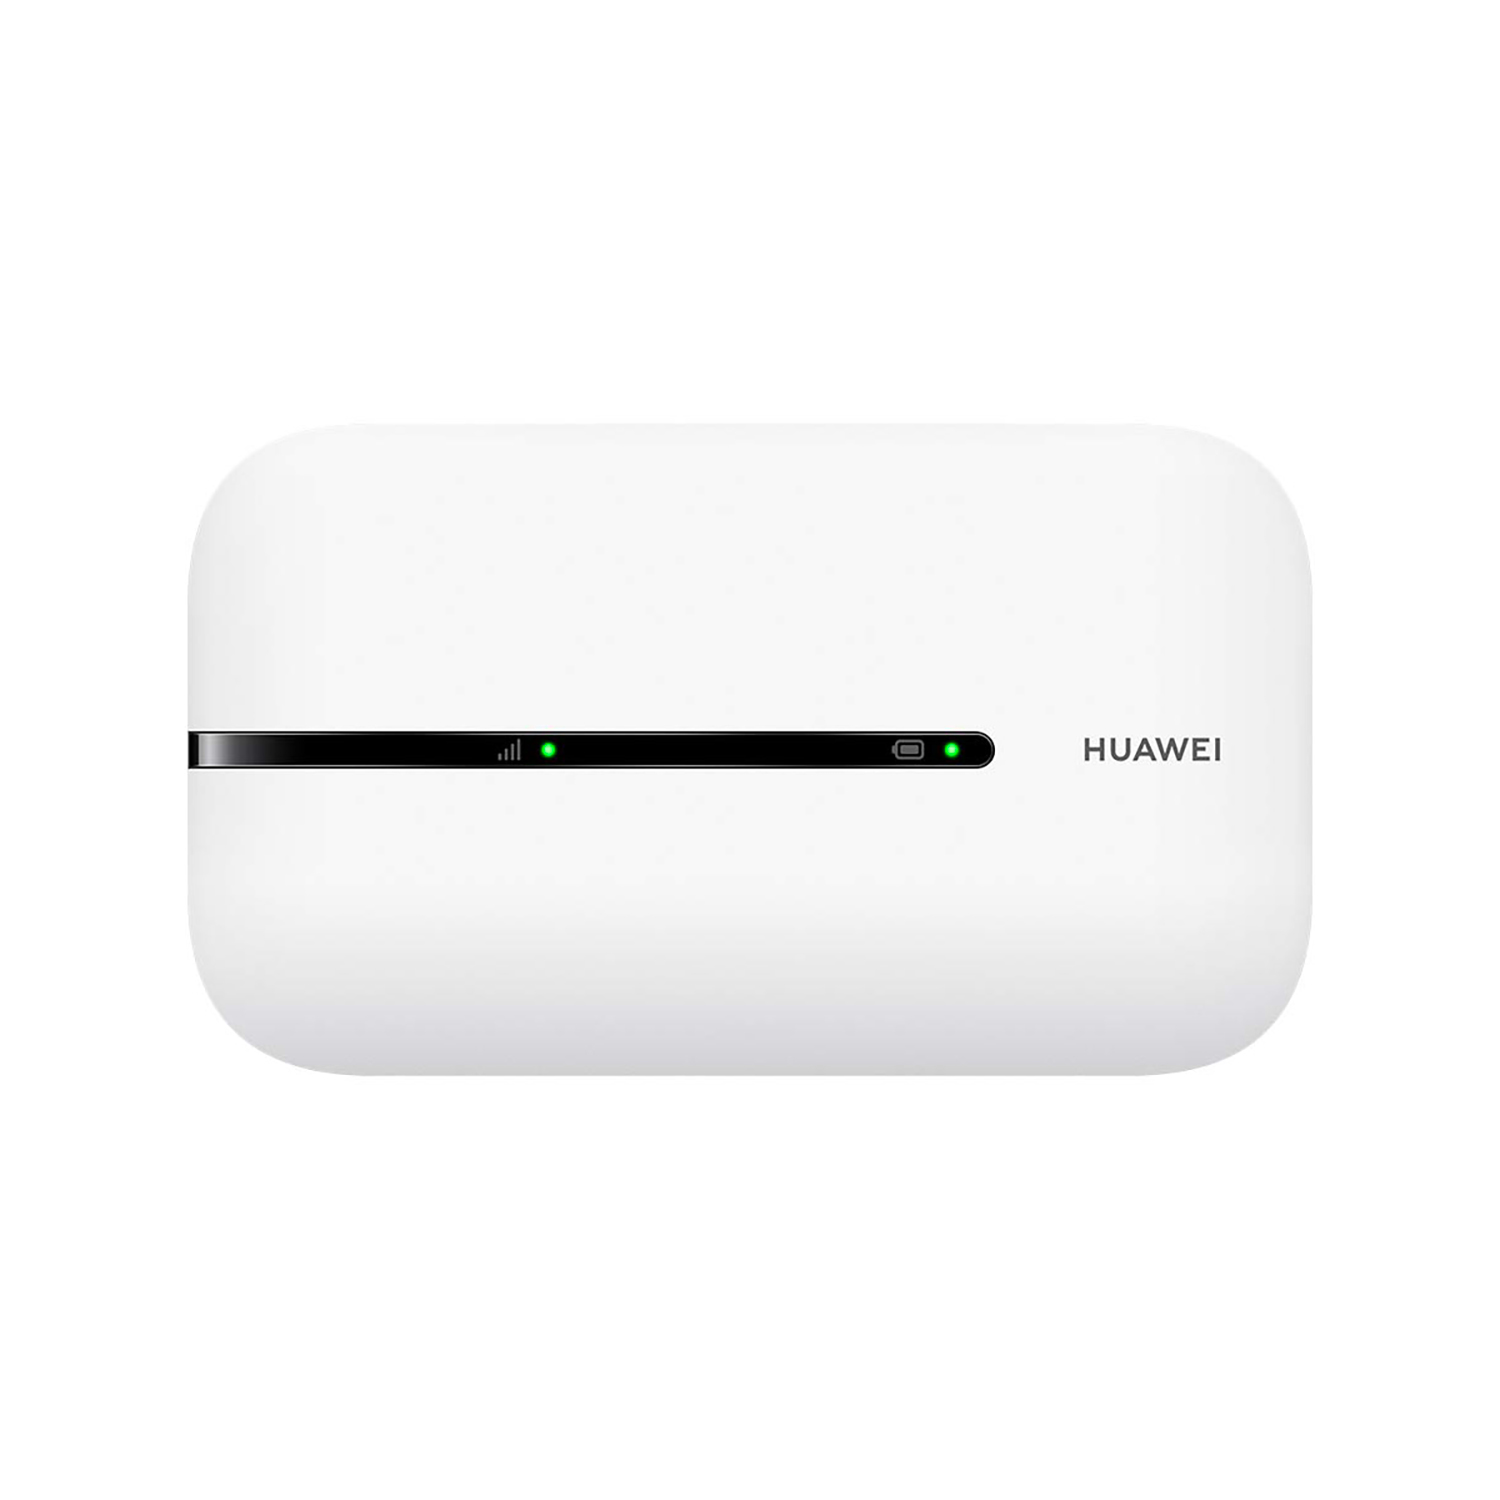 Huawei E5576-320 - Mobiler Hotspot - 4G LTE - 150 Mbps